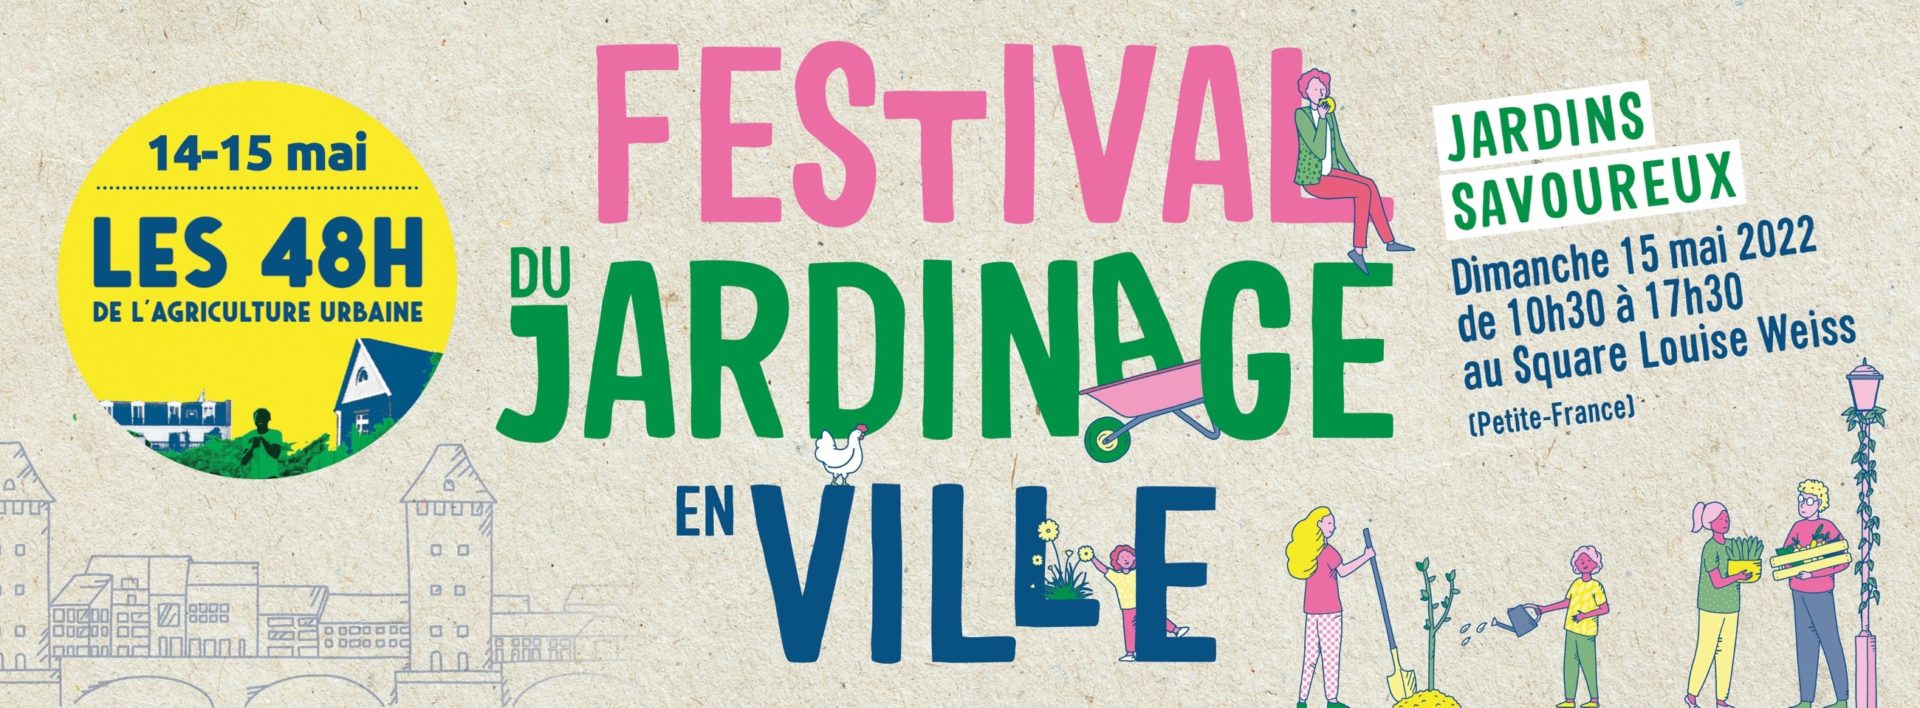 Festival du Jardinage en ville - 15 mai 2022